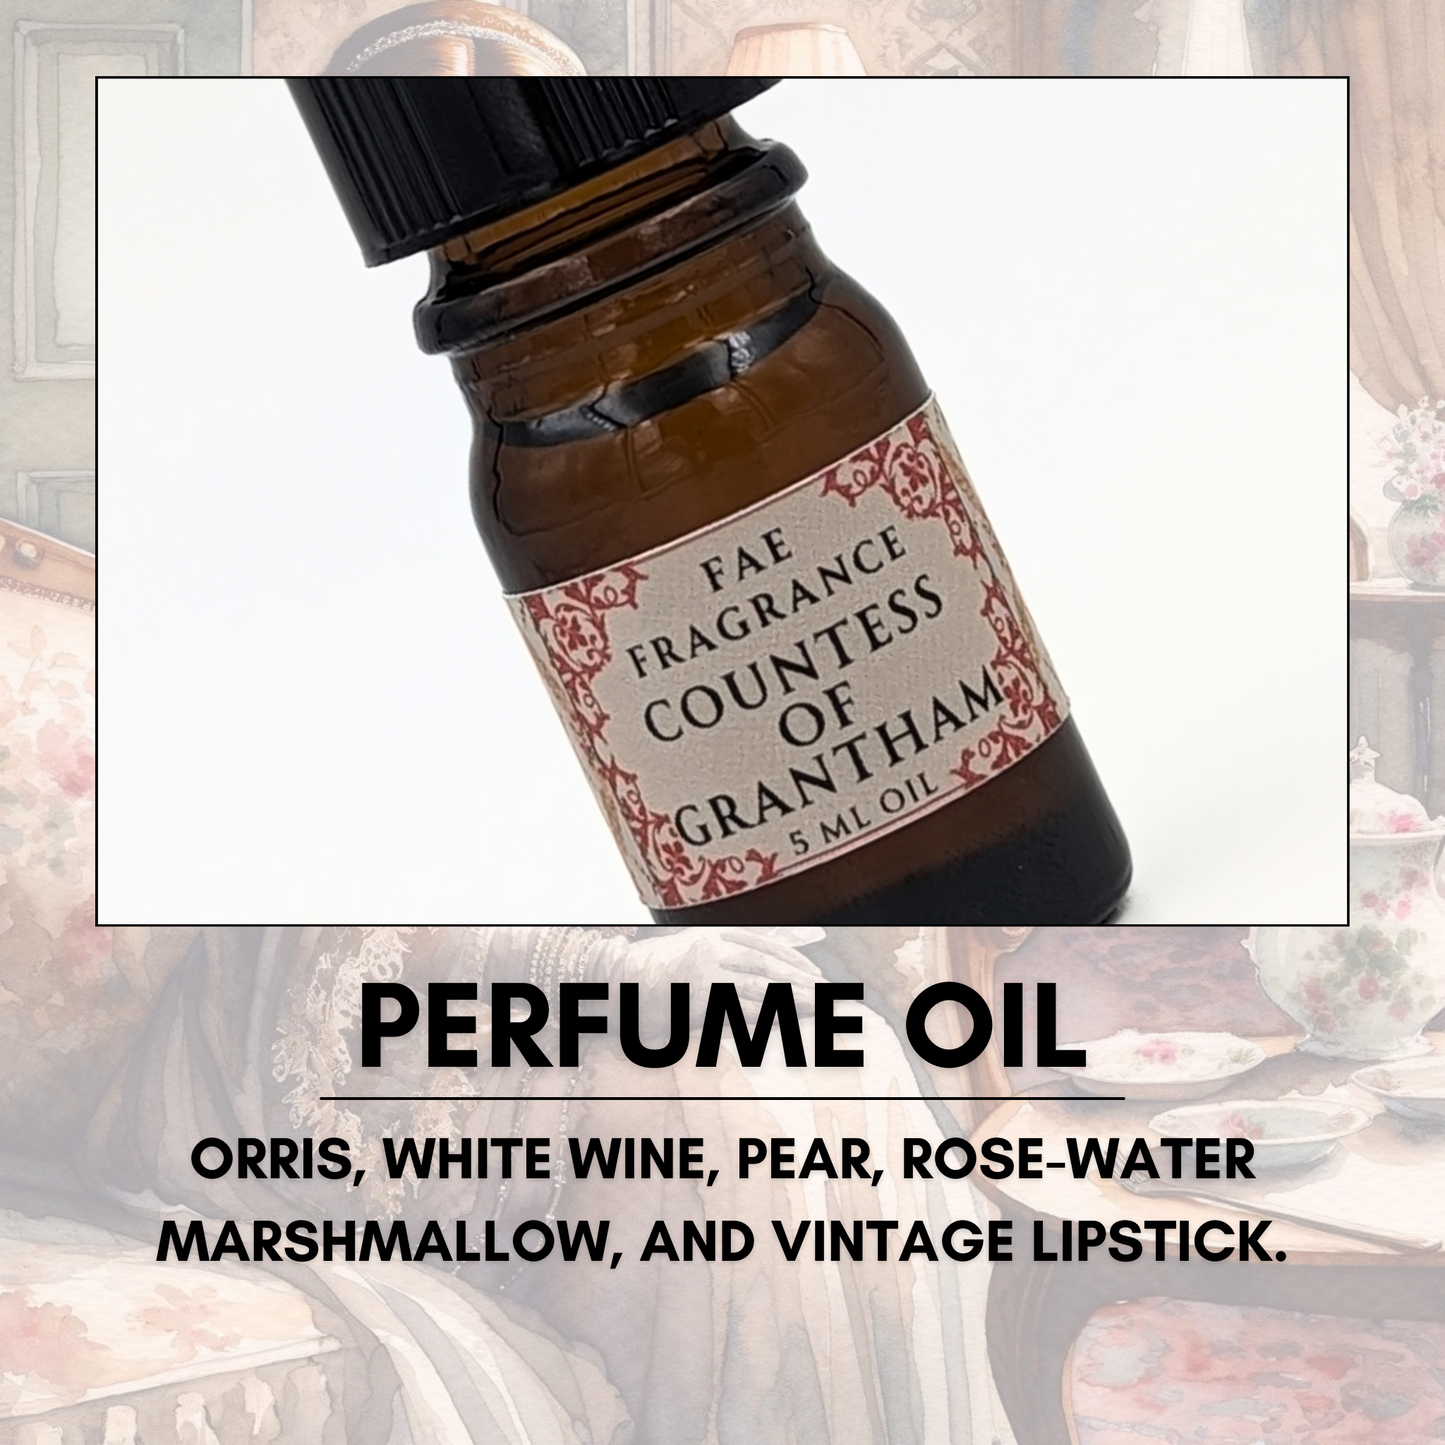 Perfume Oil - Countess of Grantham